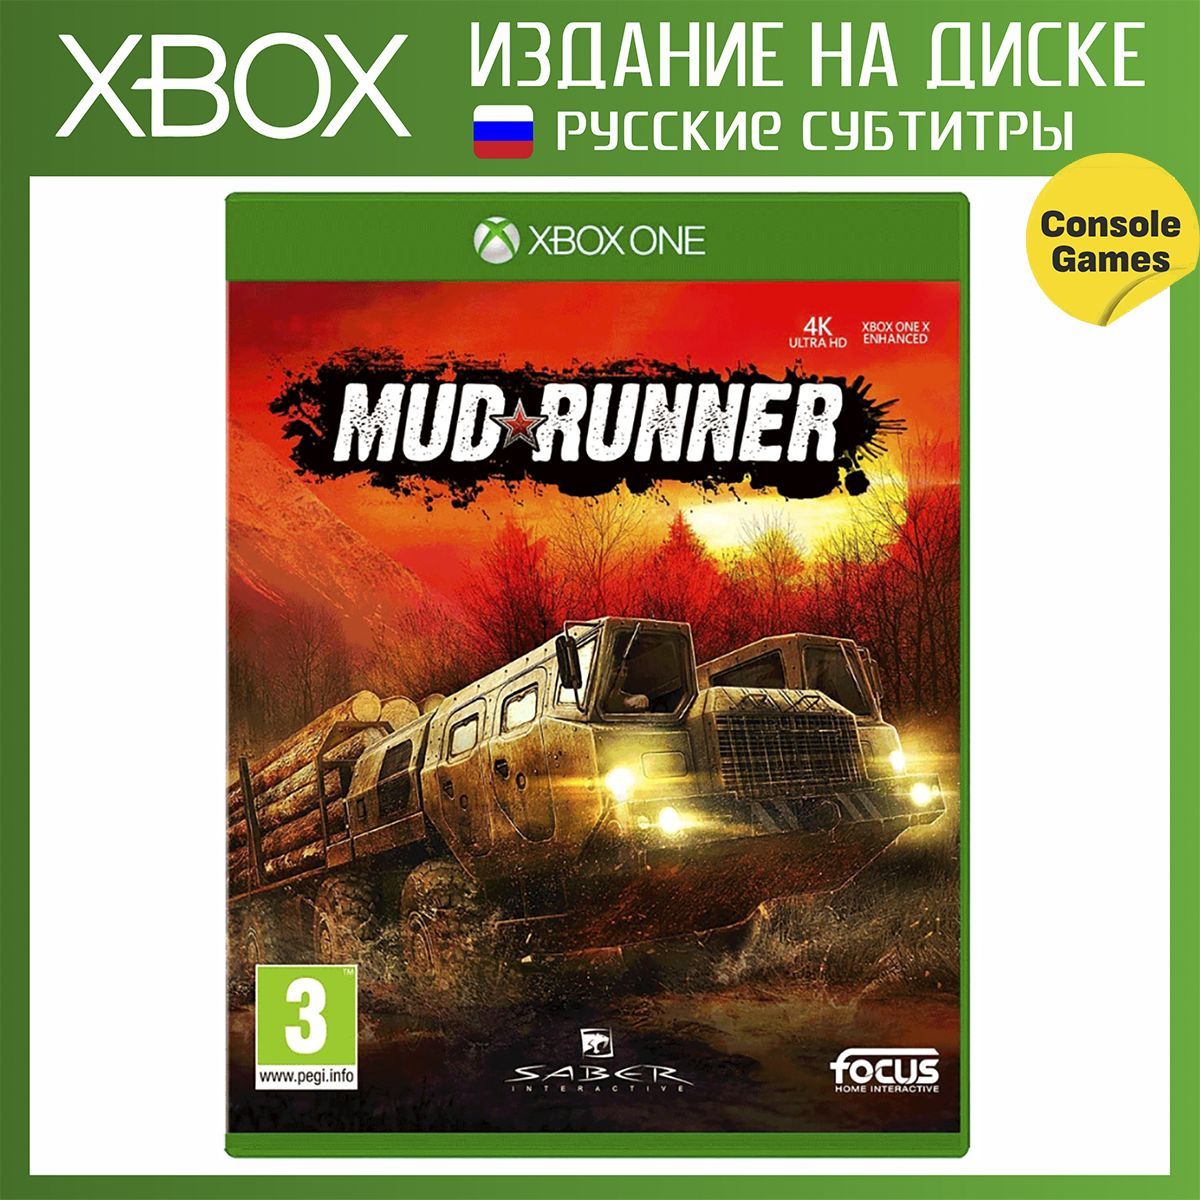 Mud Runner игра. Мод раннер Xbox. Mud Runner отзывы. Самая реалистичная грязь в какой игре Xbox. Mudrunner xbox купить